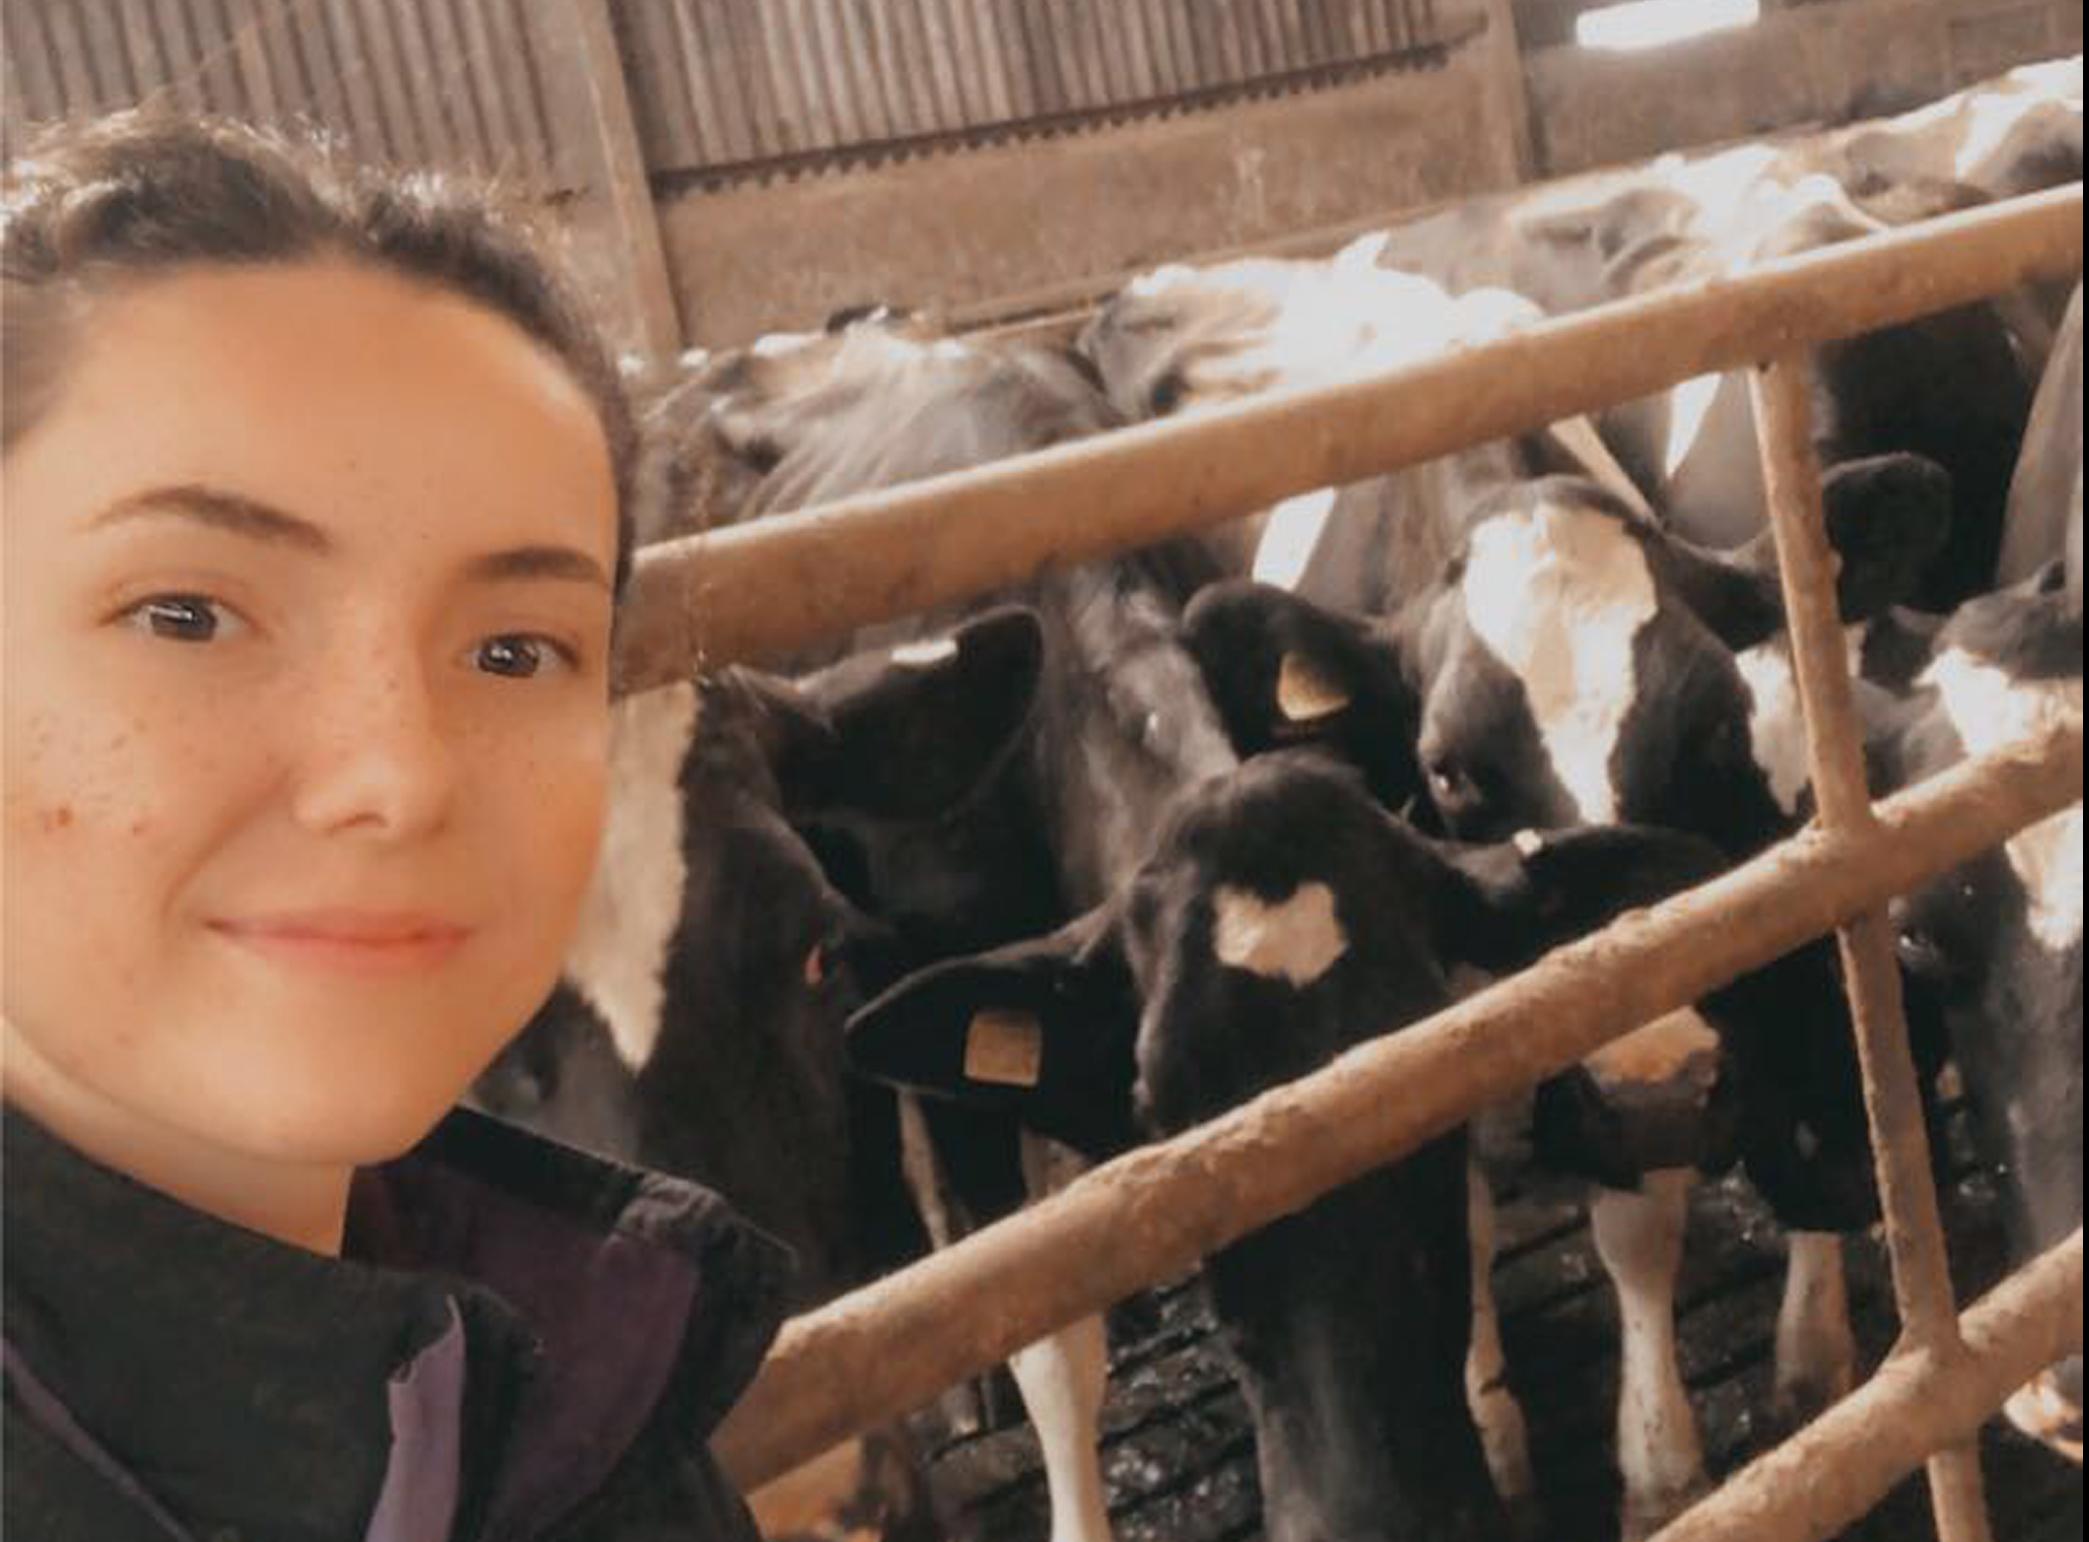 Heather finds work at dairy farm through skills matching service